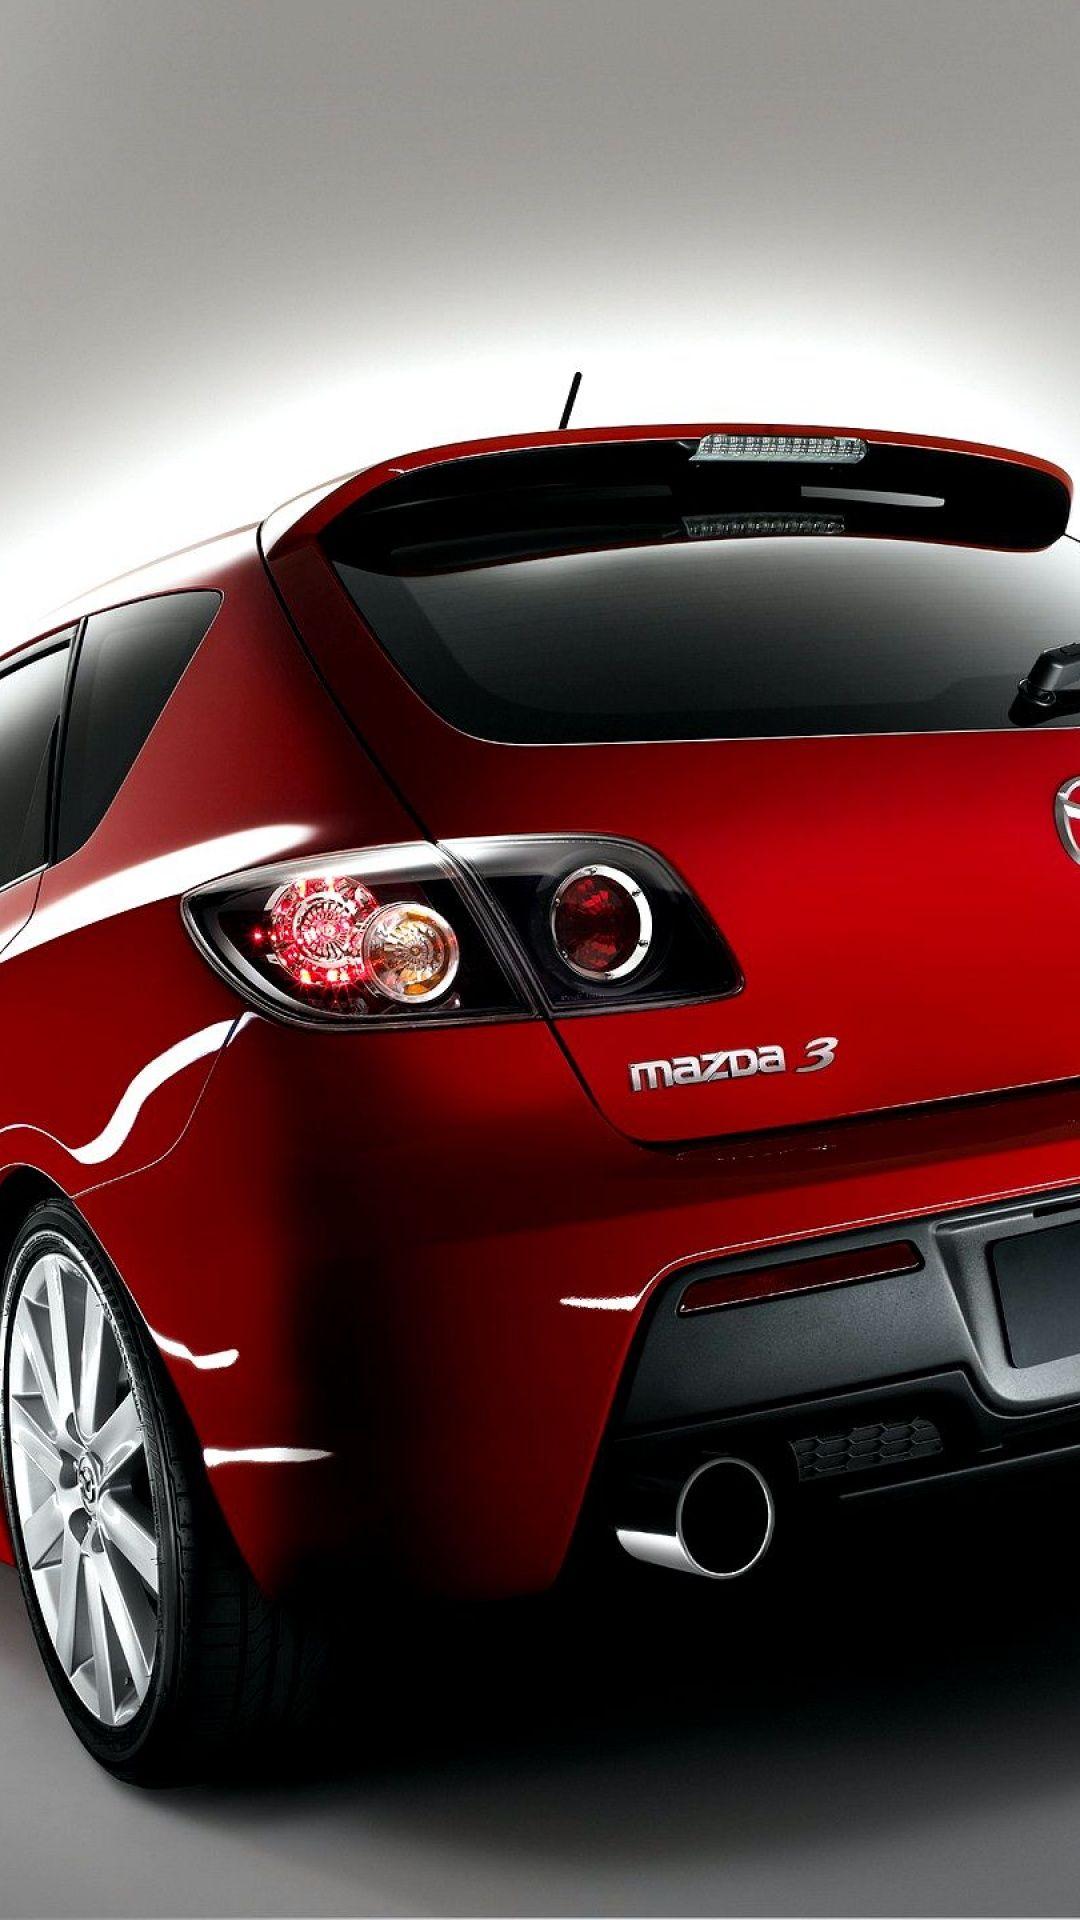 Mazdaspeed 3 Wallpapers